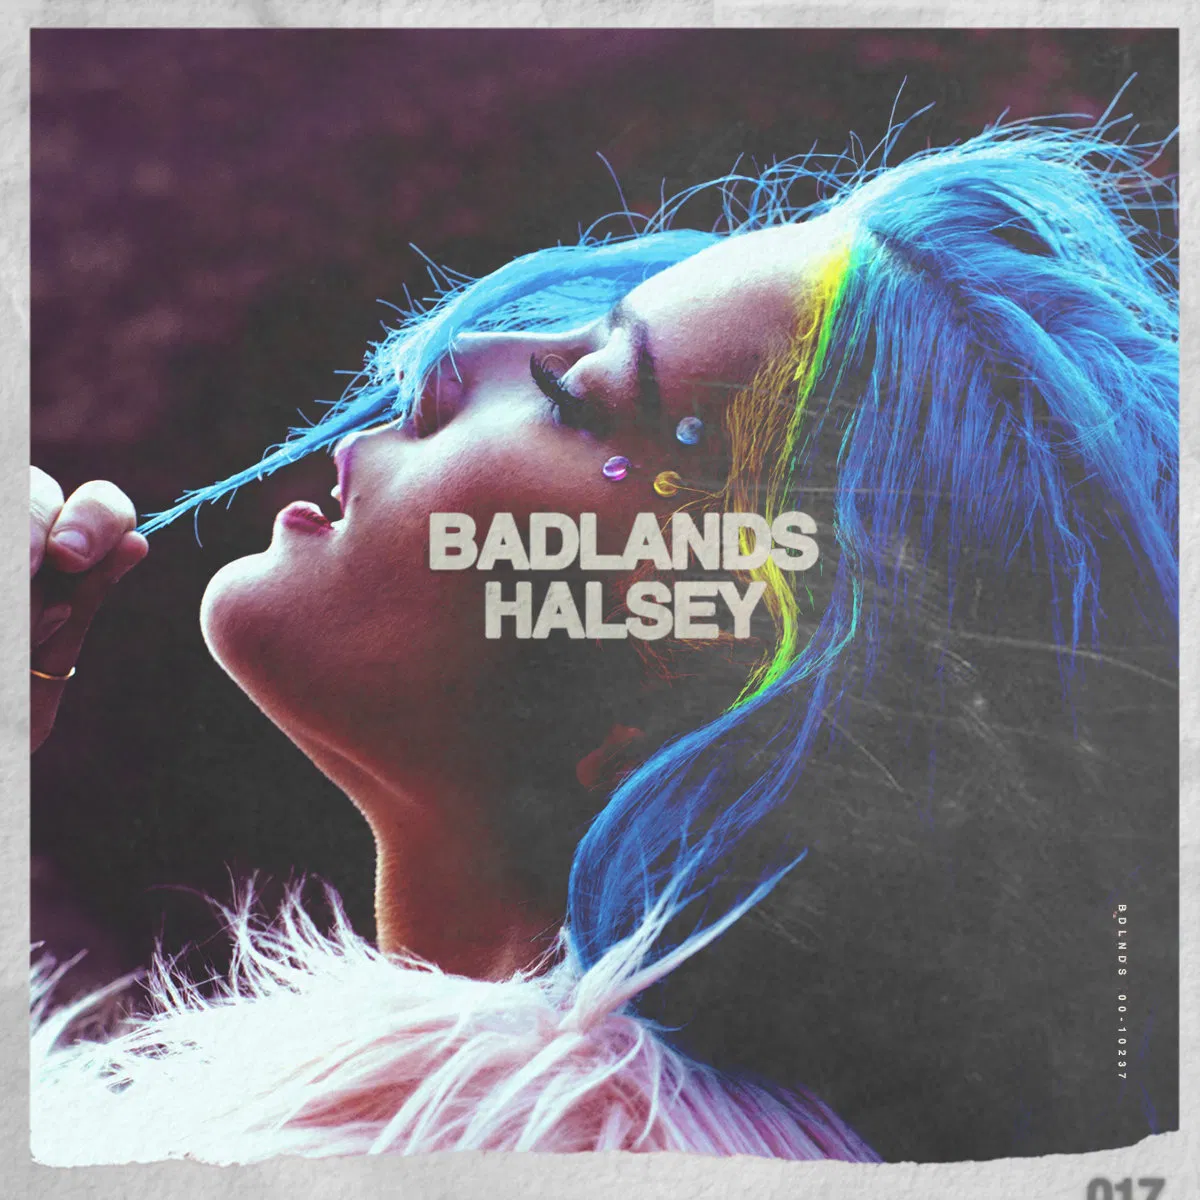 Halsey – New Americana